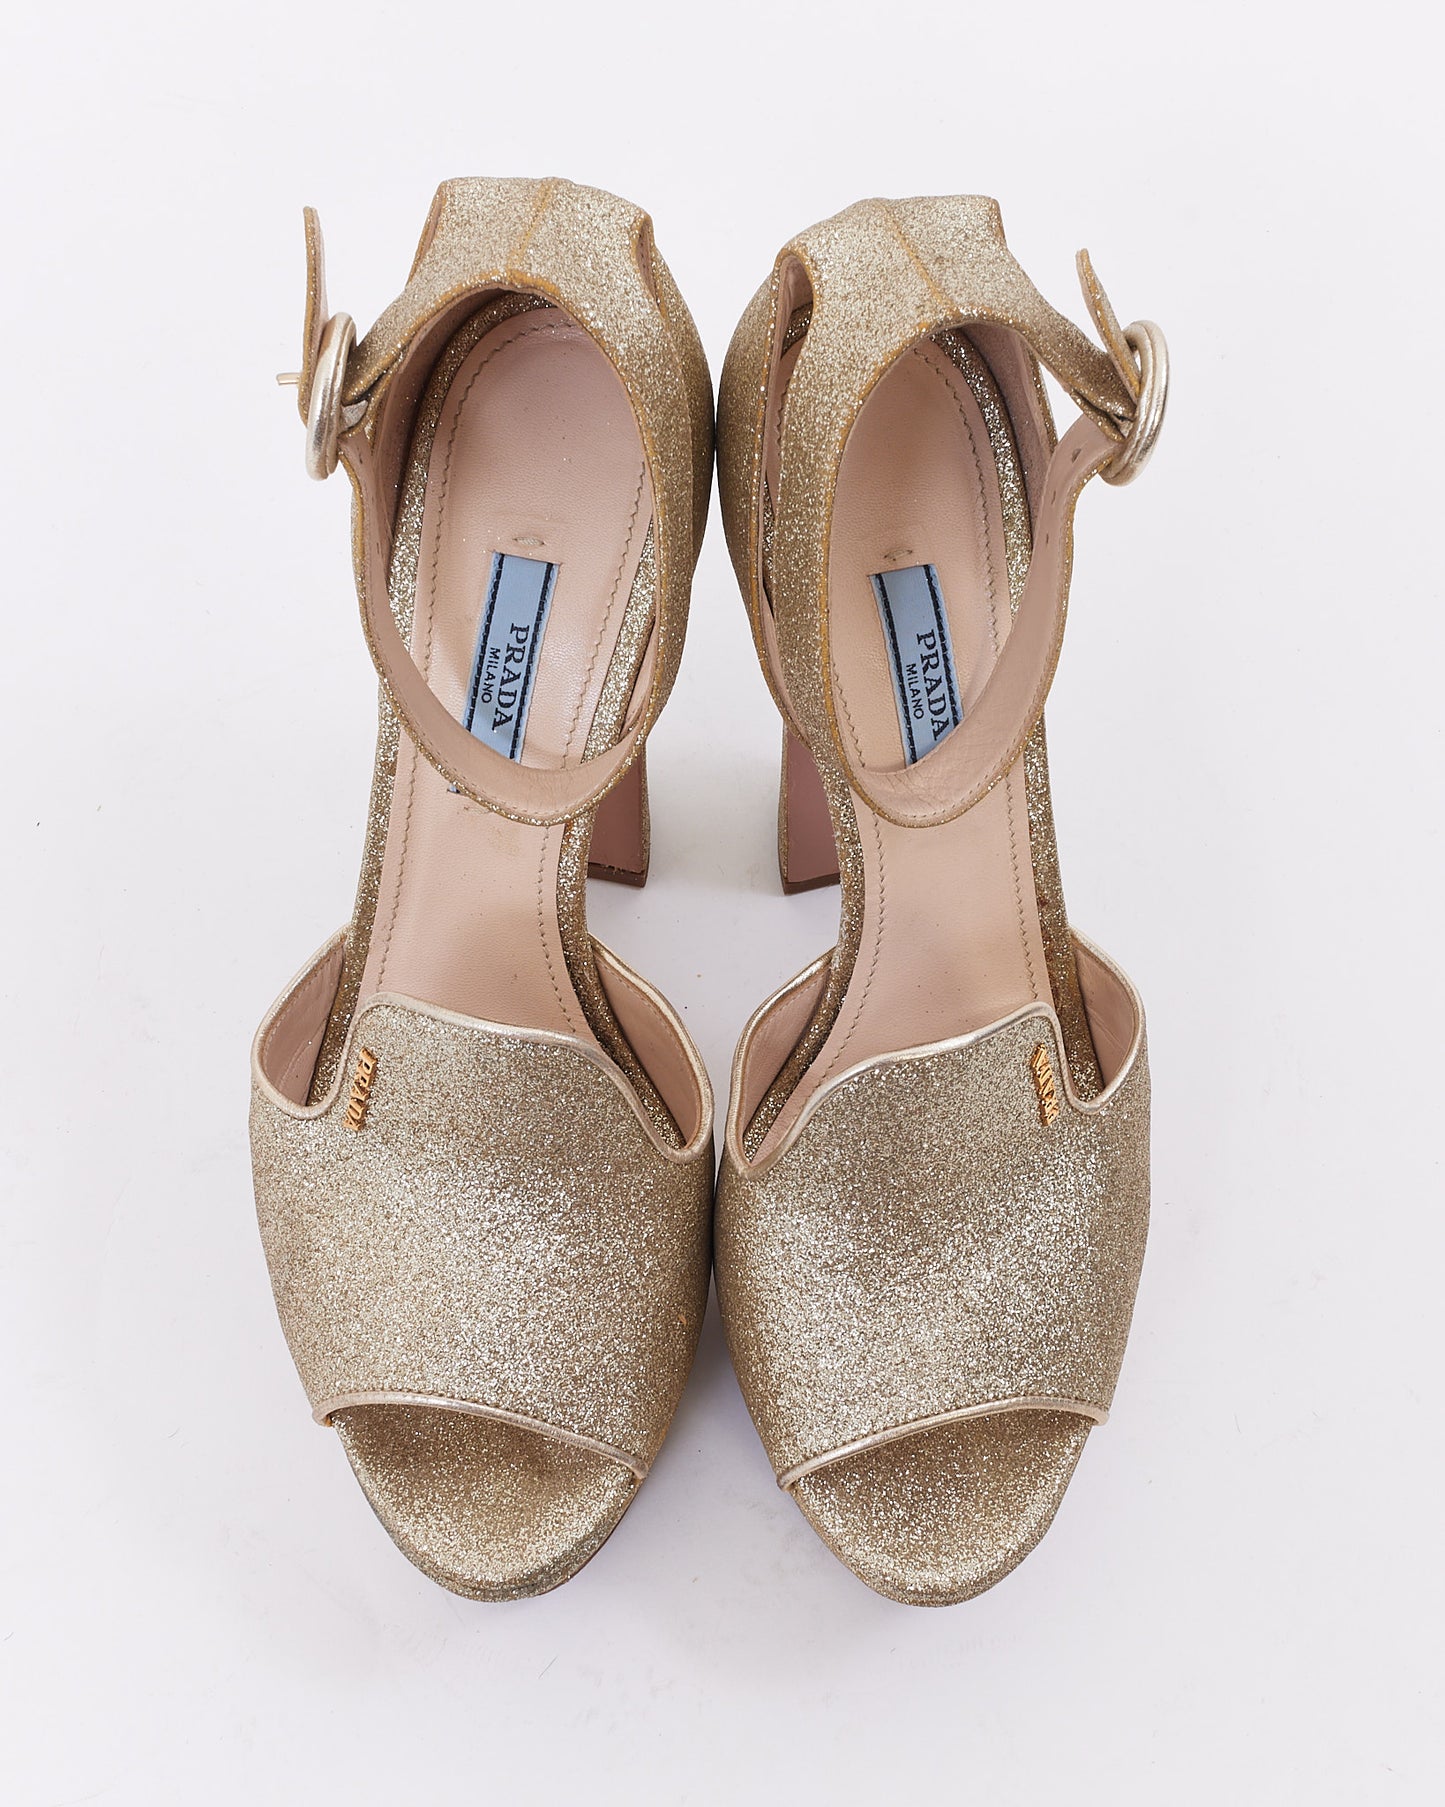 Prada Gold Glitter Platform Ankle Wrap Heels - 38